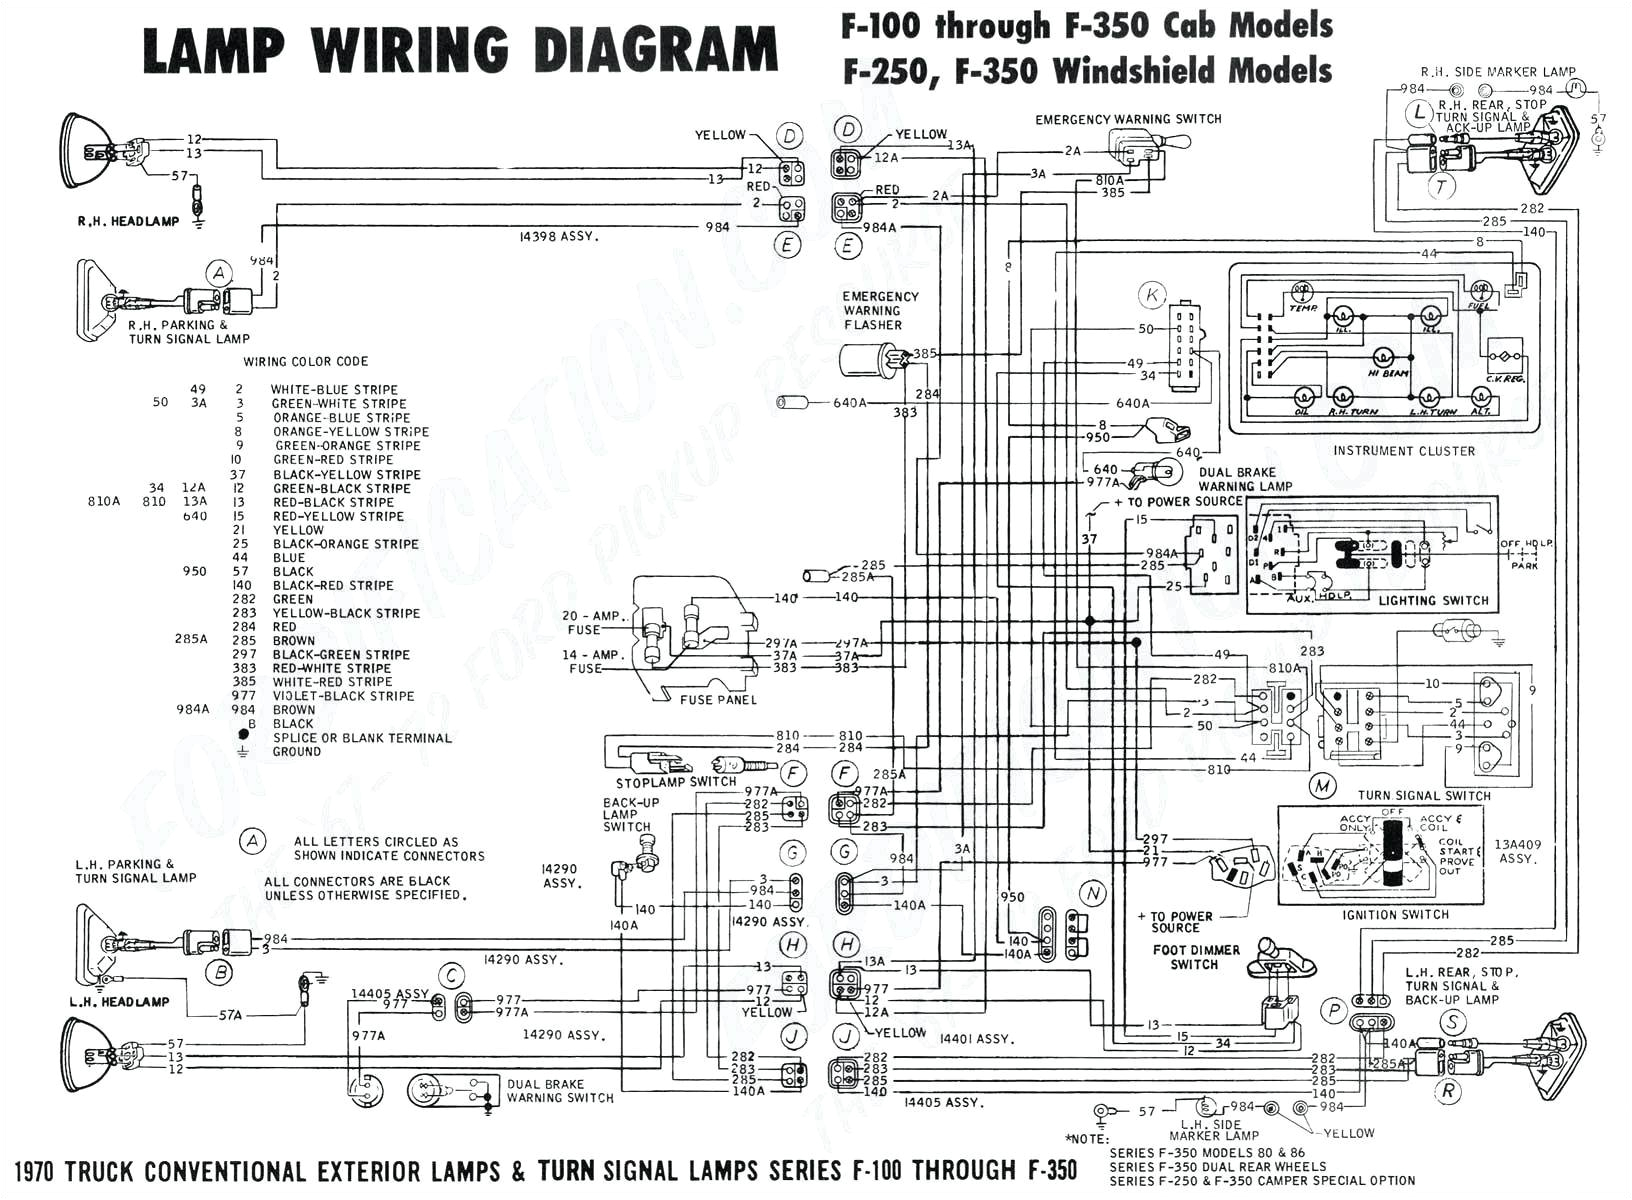 2jz gte wiring harness pin 45b wiring diagram files 2jz gte wiring harness pin 45b wiring